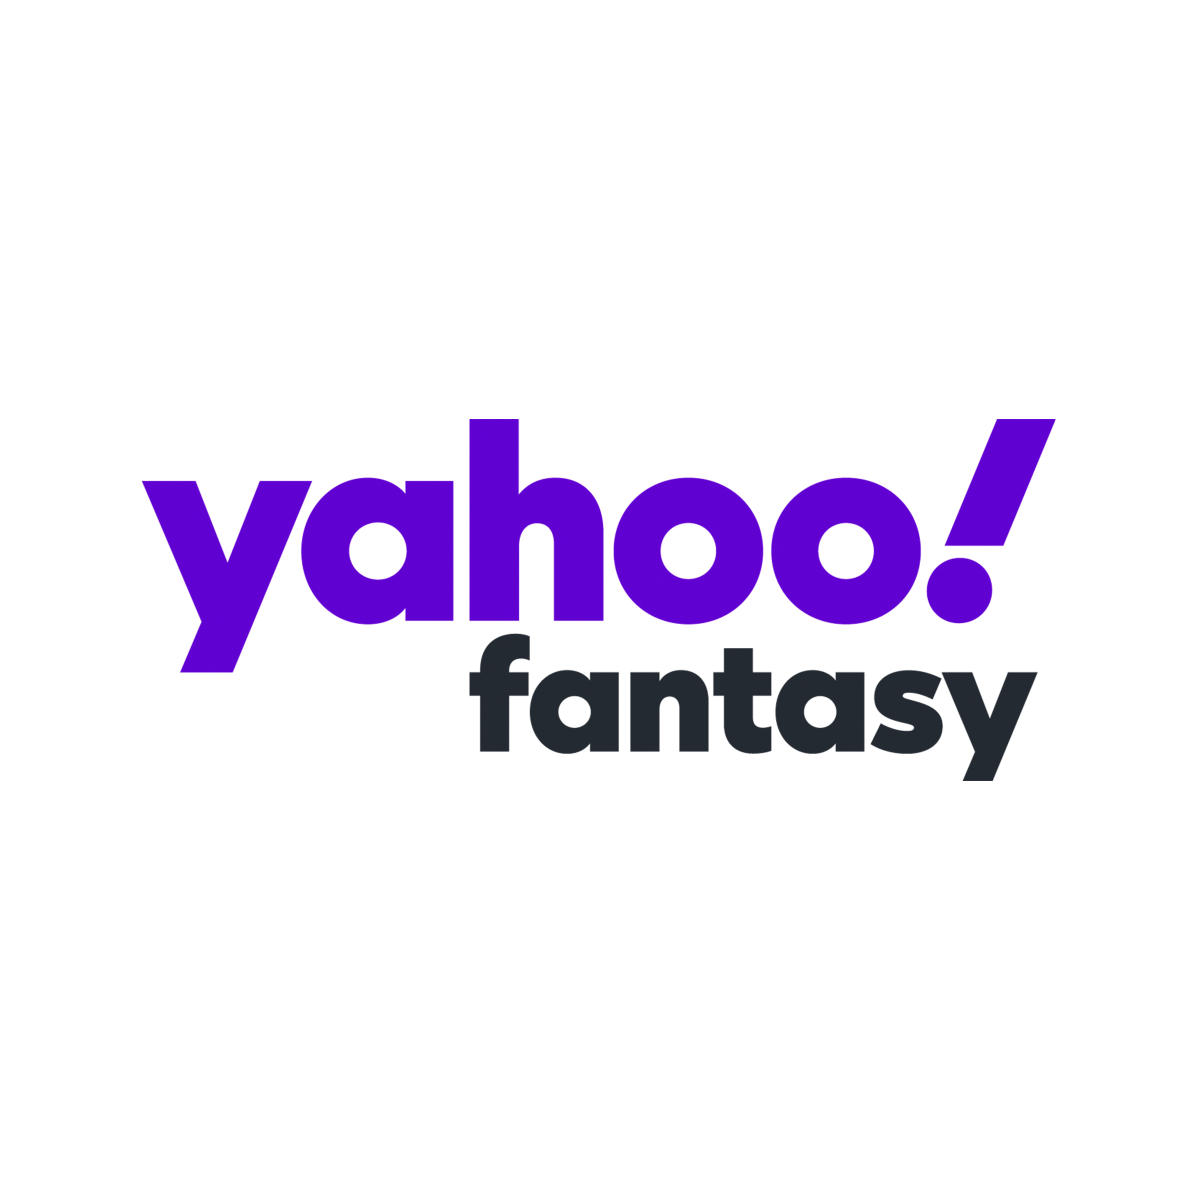 Yahoo Fantasy Football, Baseball, Basketball, Hockey and more